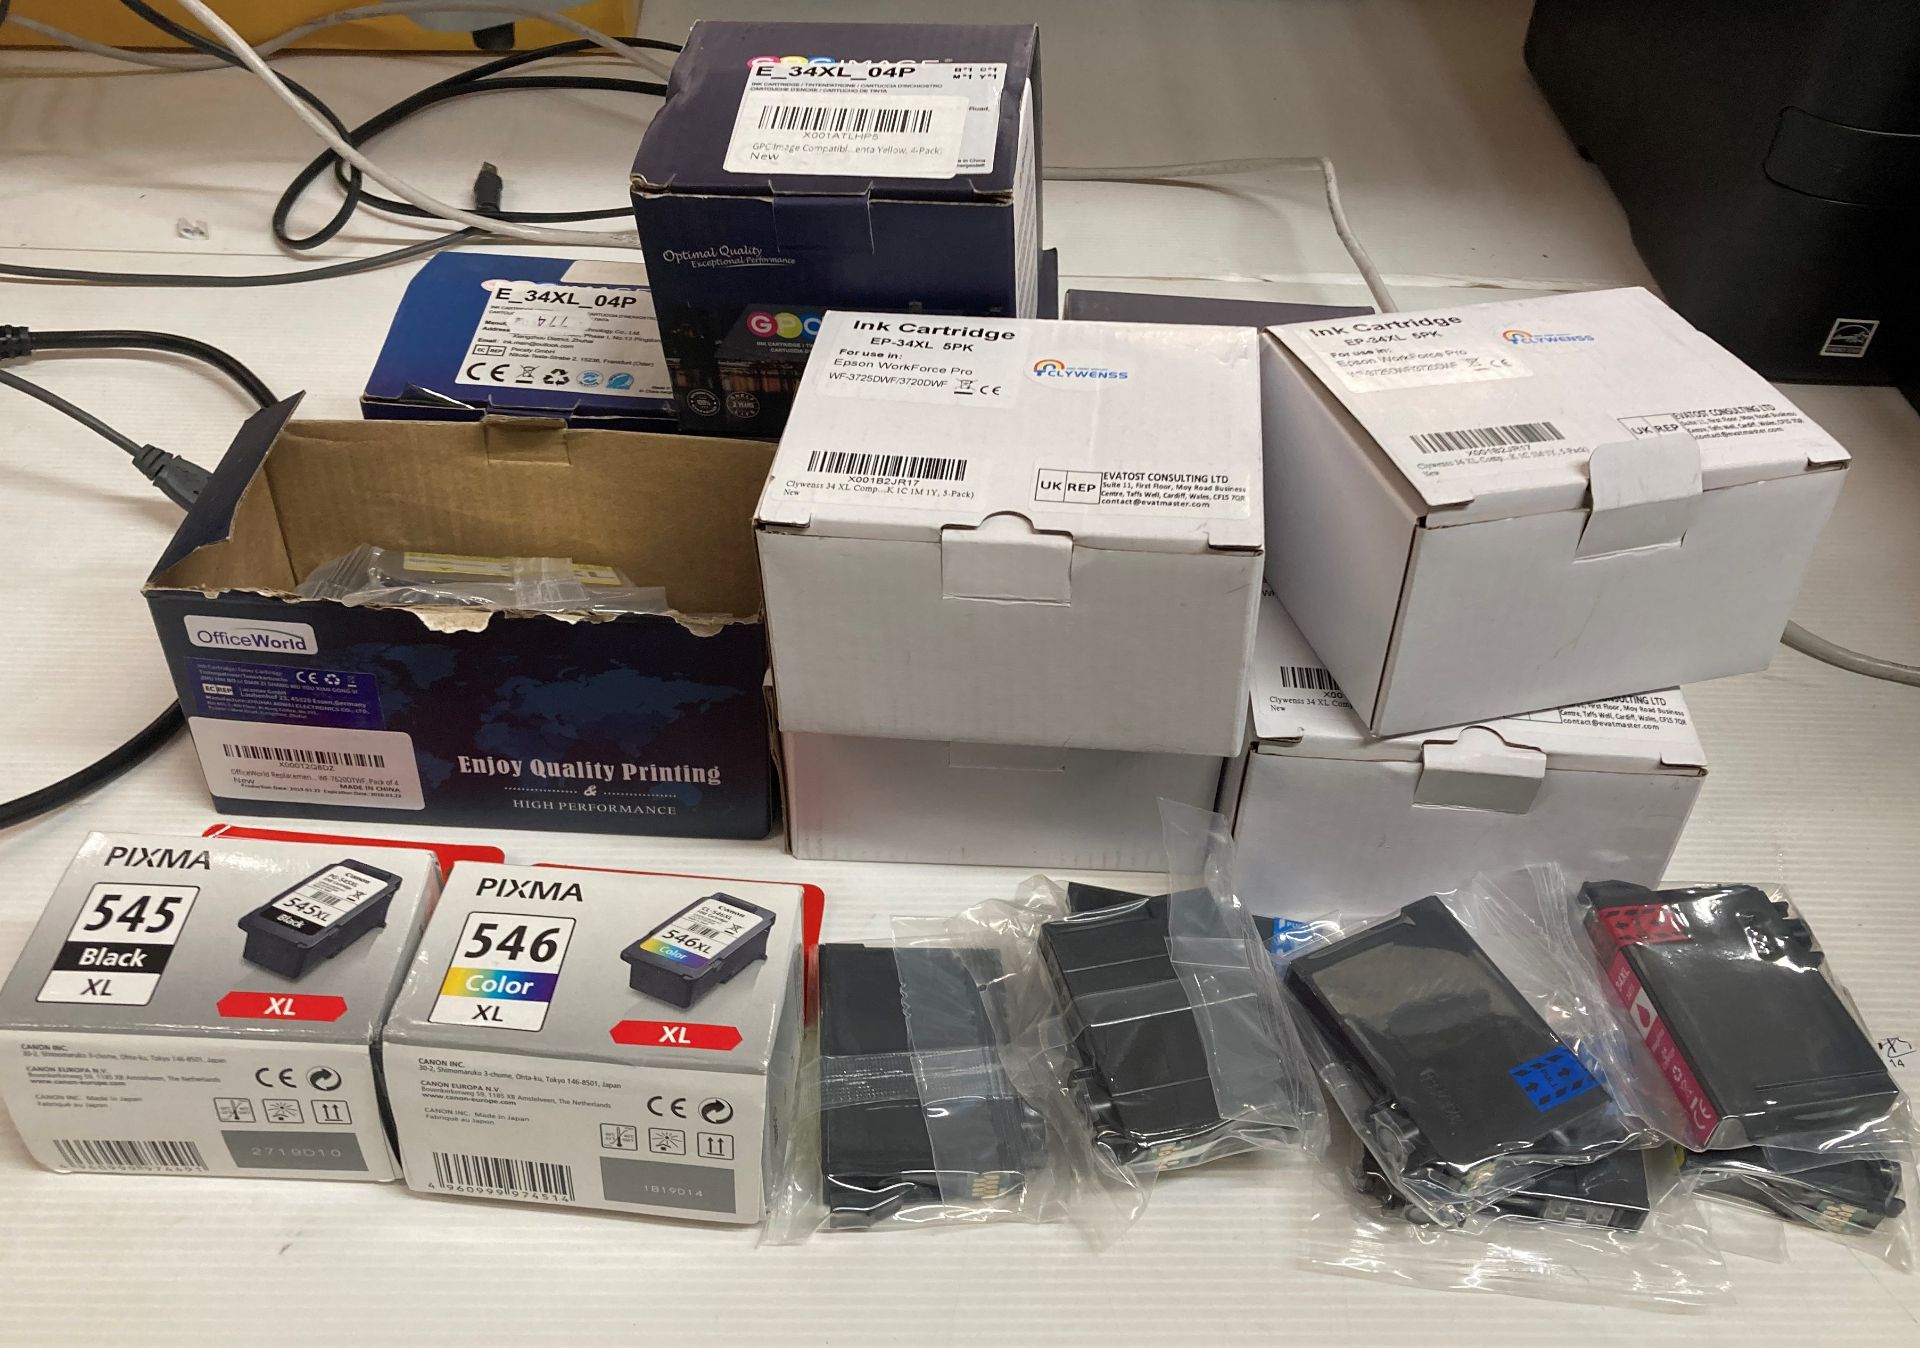 Quantity of printer ink cartridges for Epson Work Force printers (saleroom location: K12)